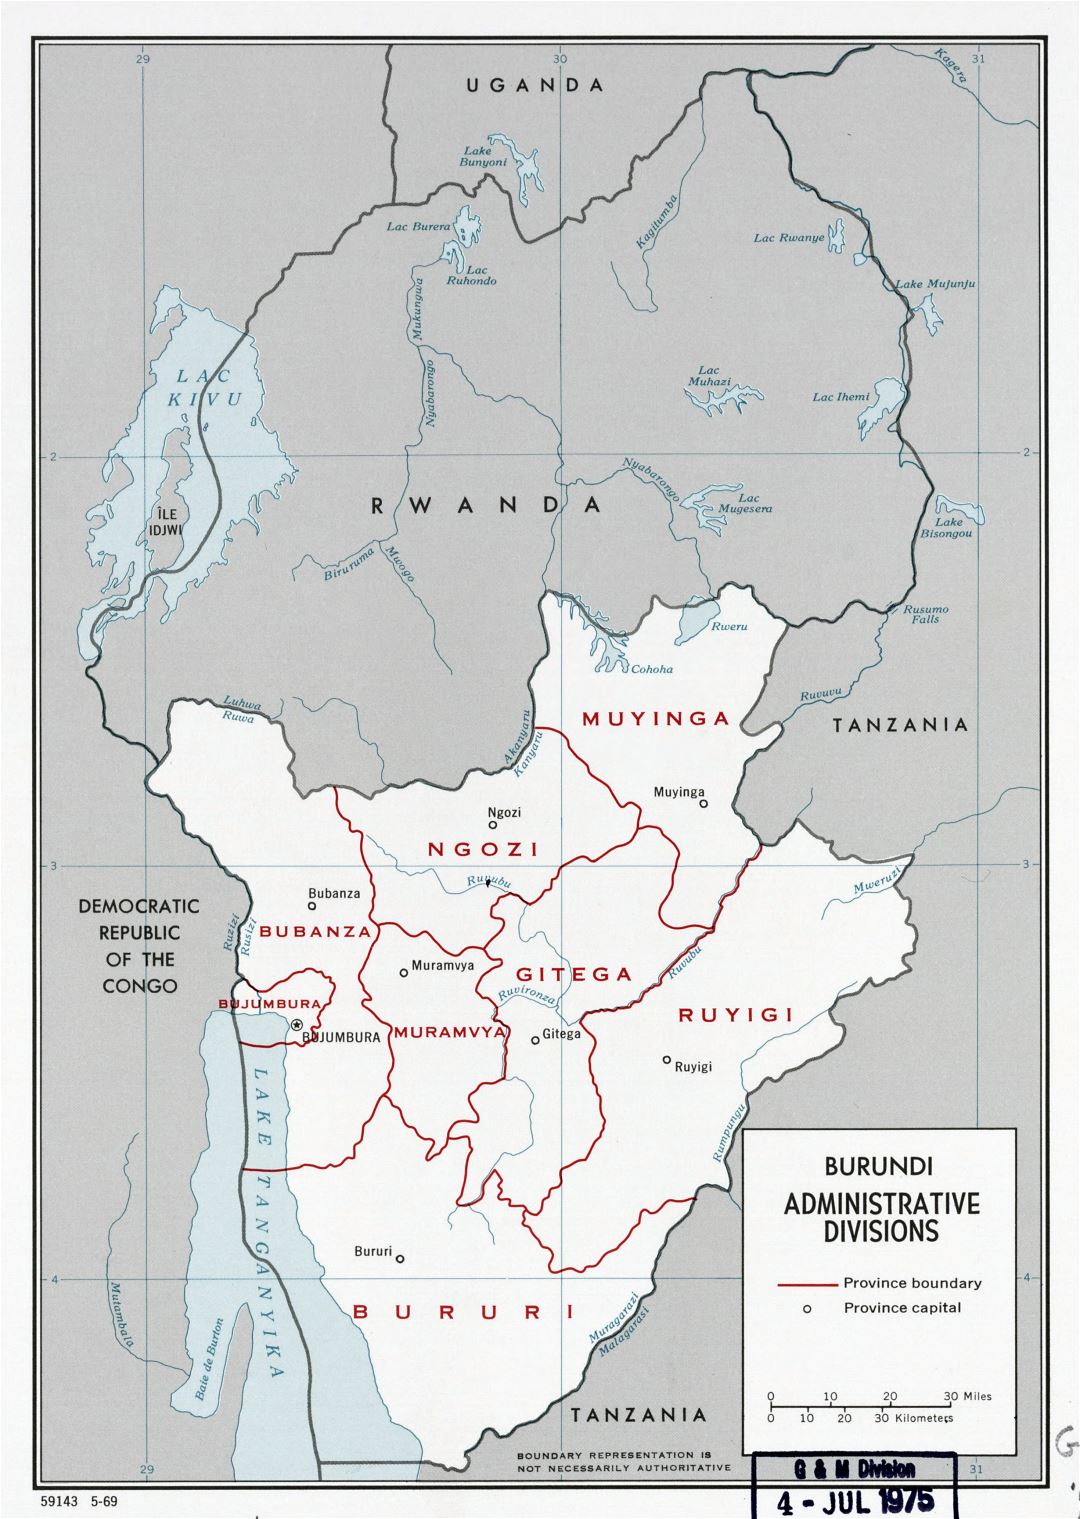 Large scale administrative divisions map of Burundi - 1969